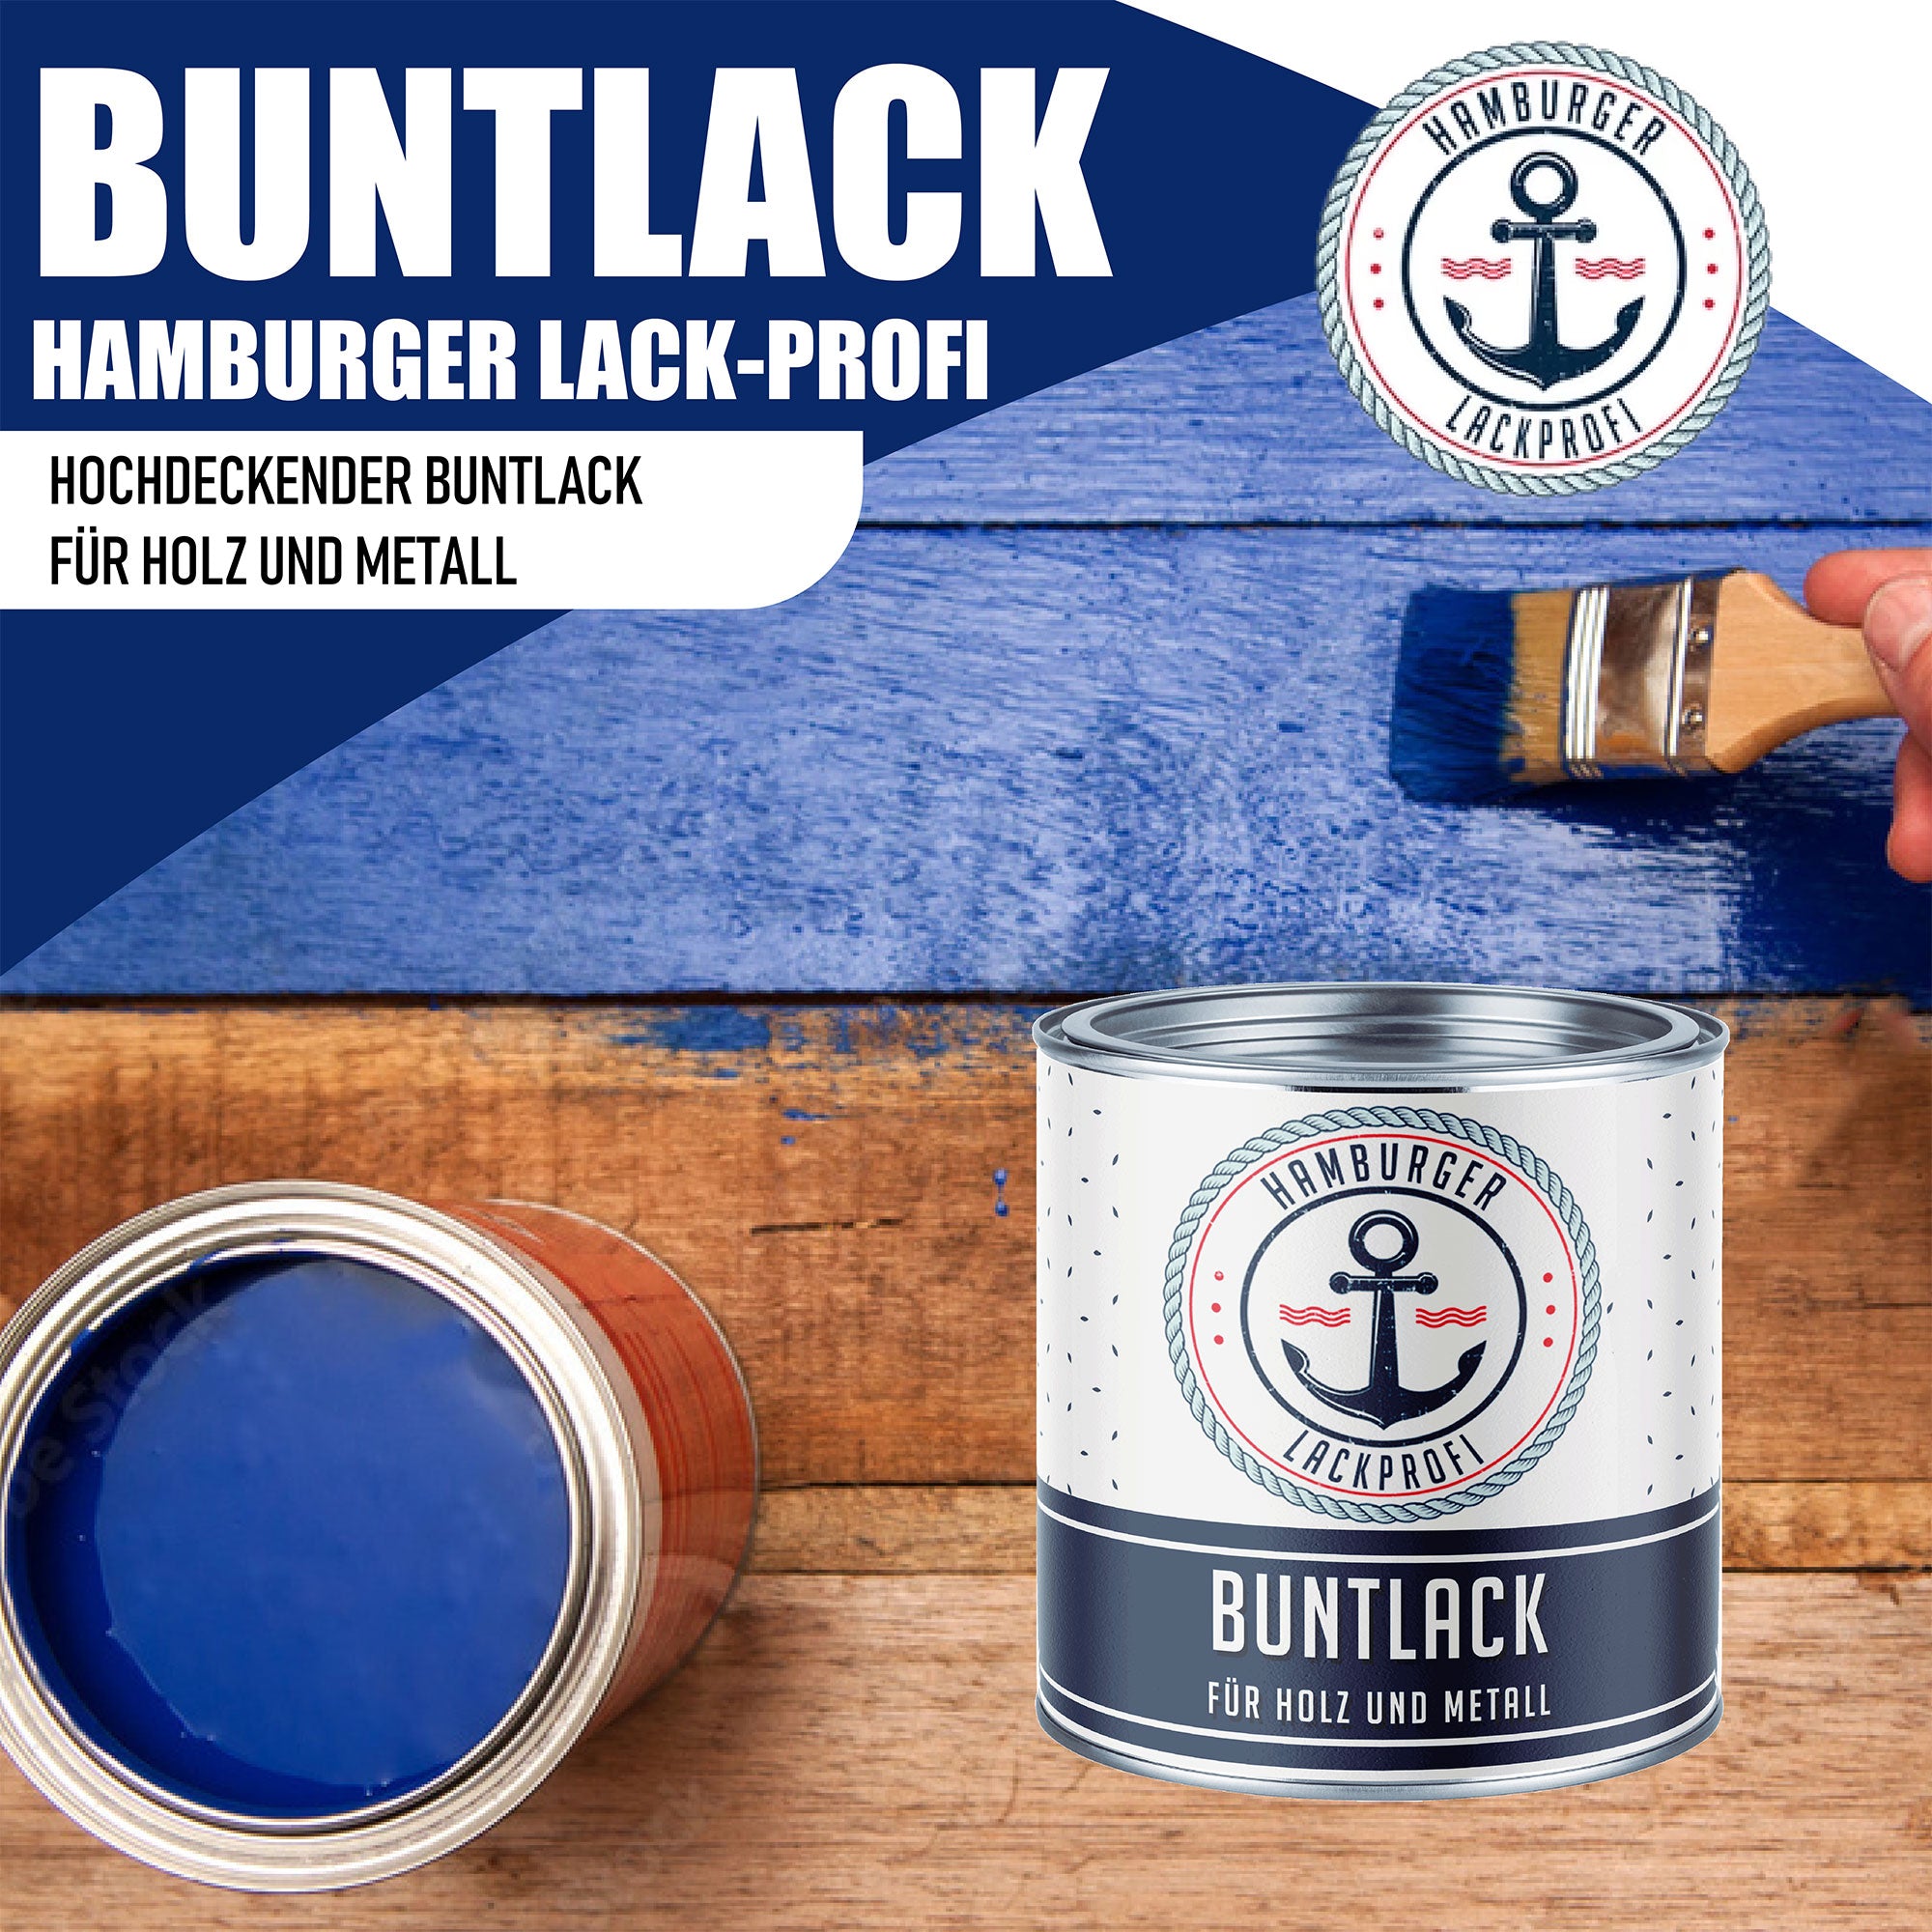 Hamburger Lack-Profi Buntlack Pastellorange RAL 2003 - Robuster Kunstharzlack